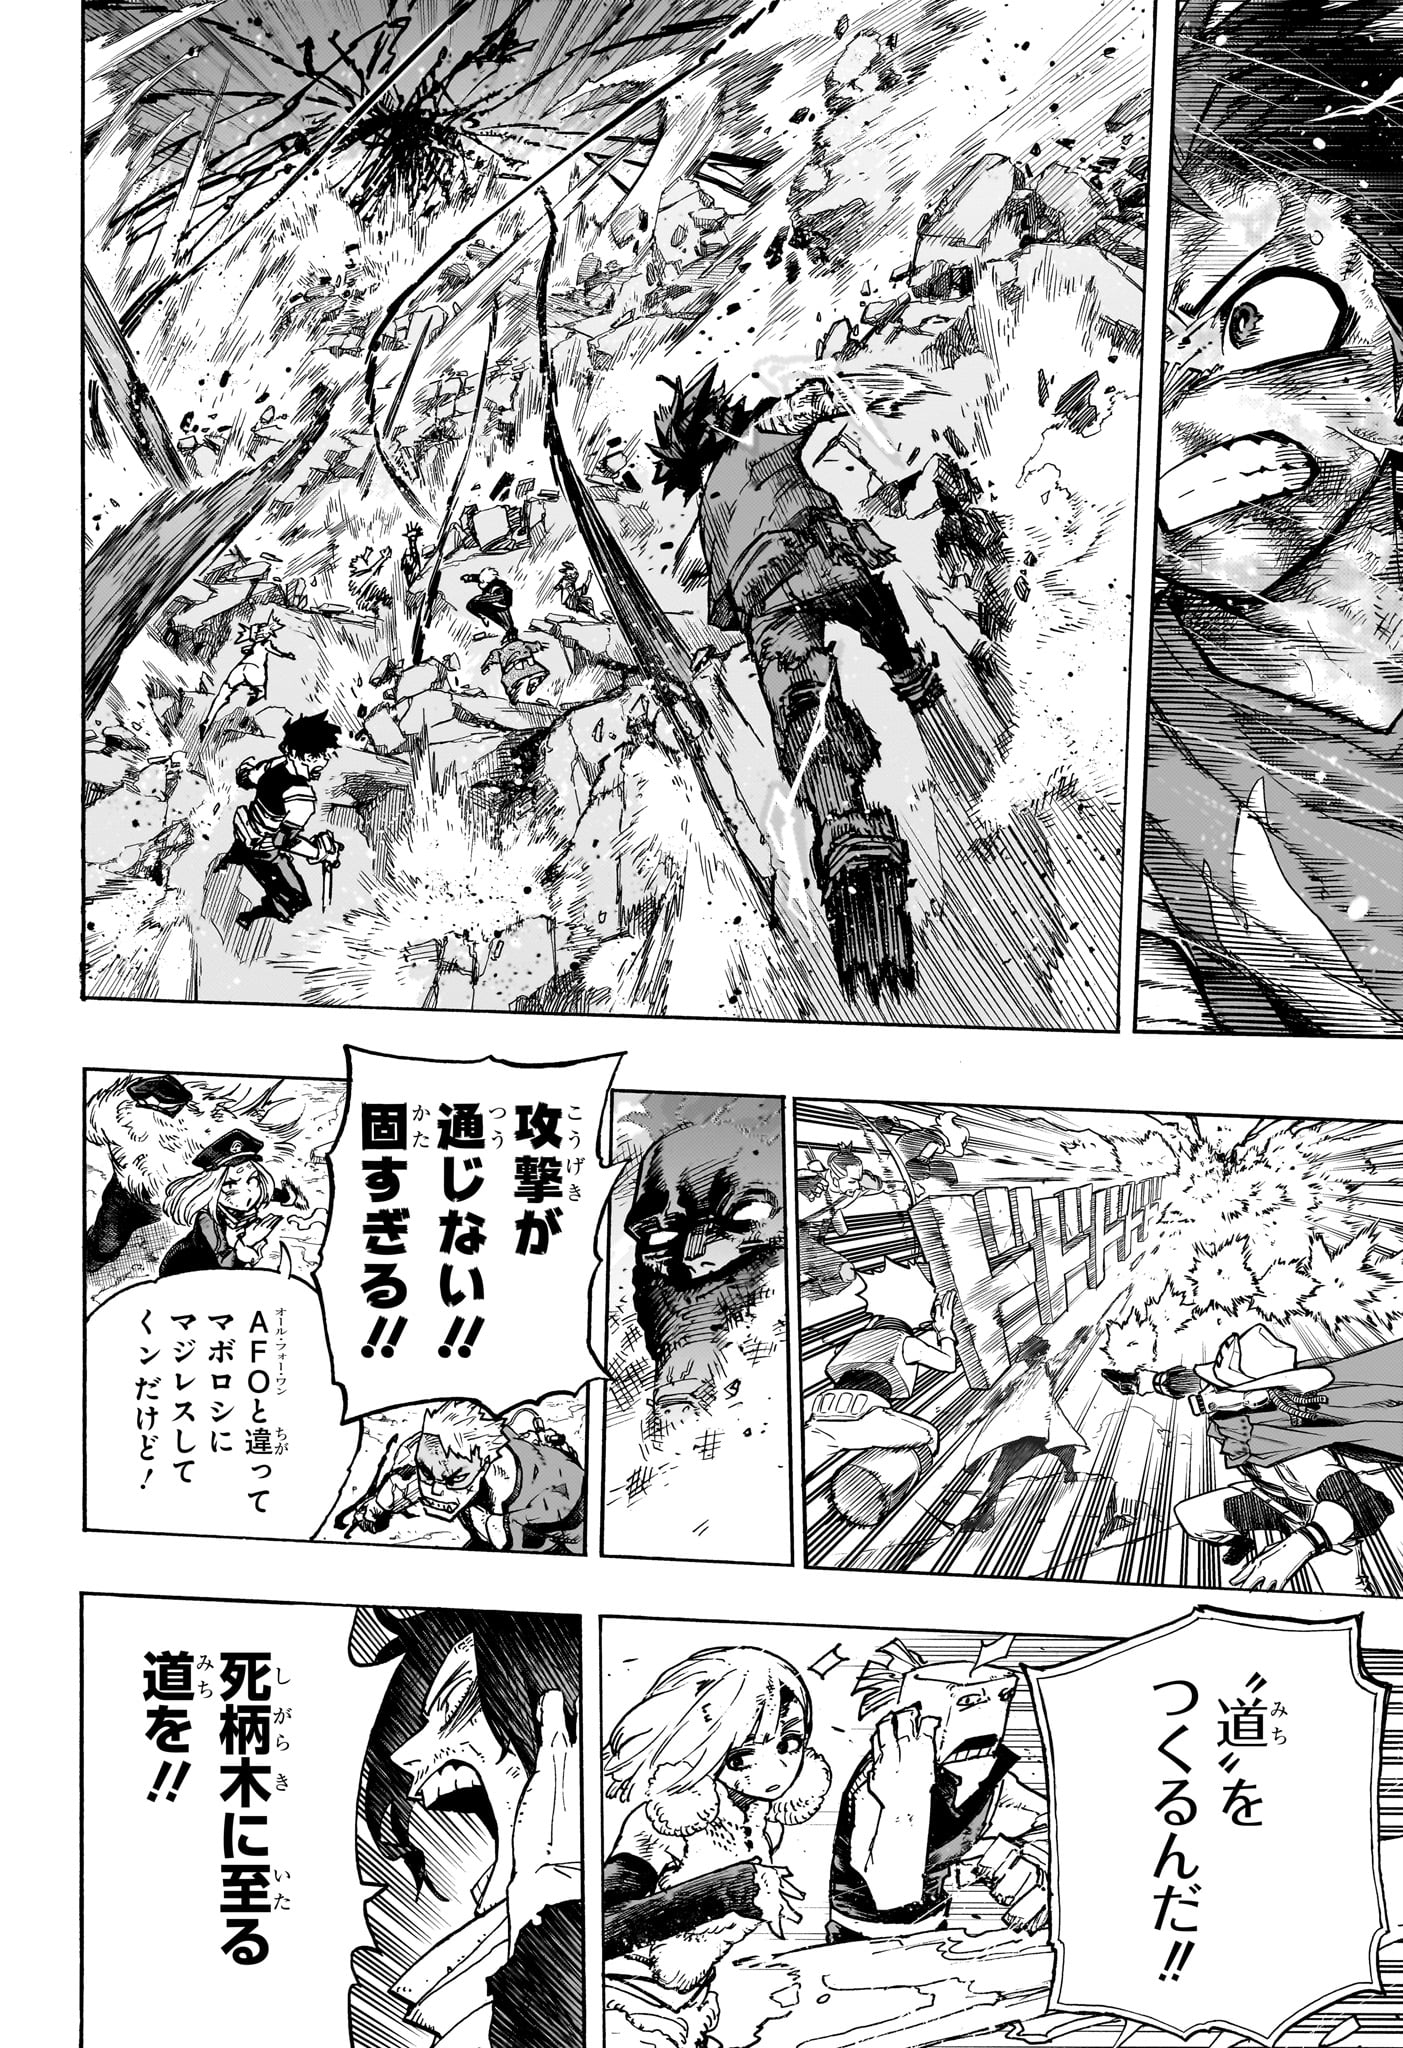 Boku no Hero Academia - Chapter 422 - Page 2